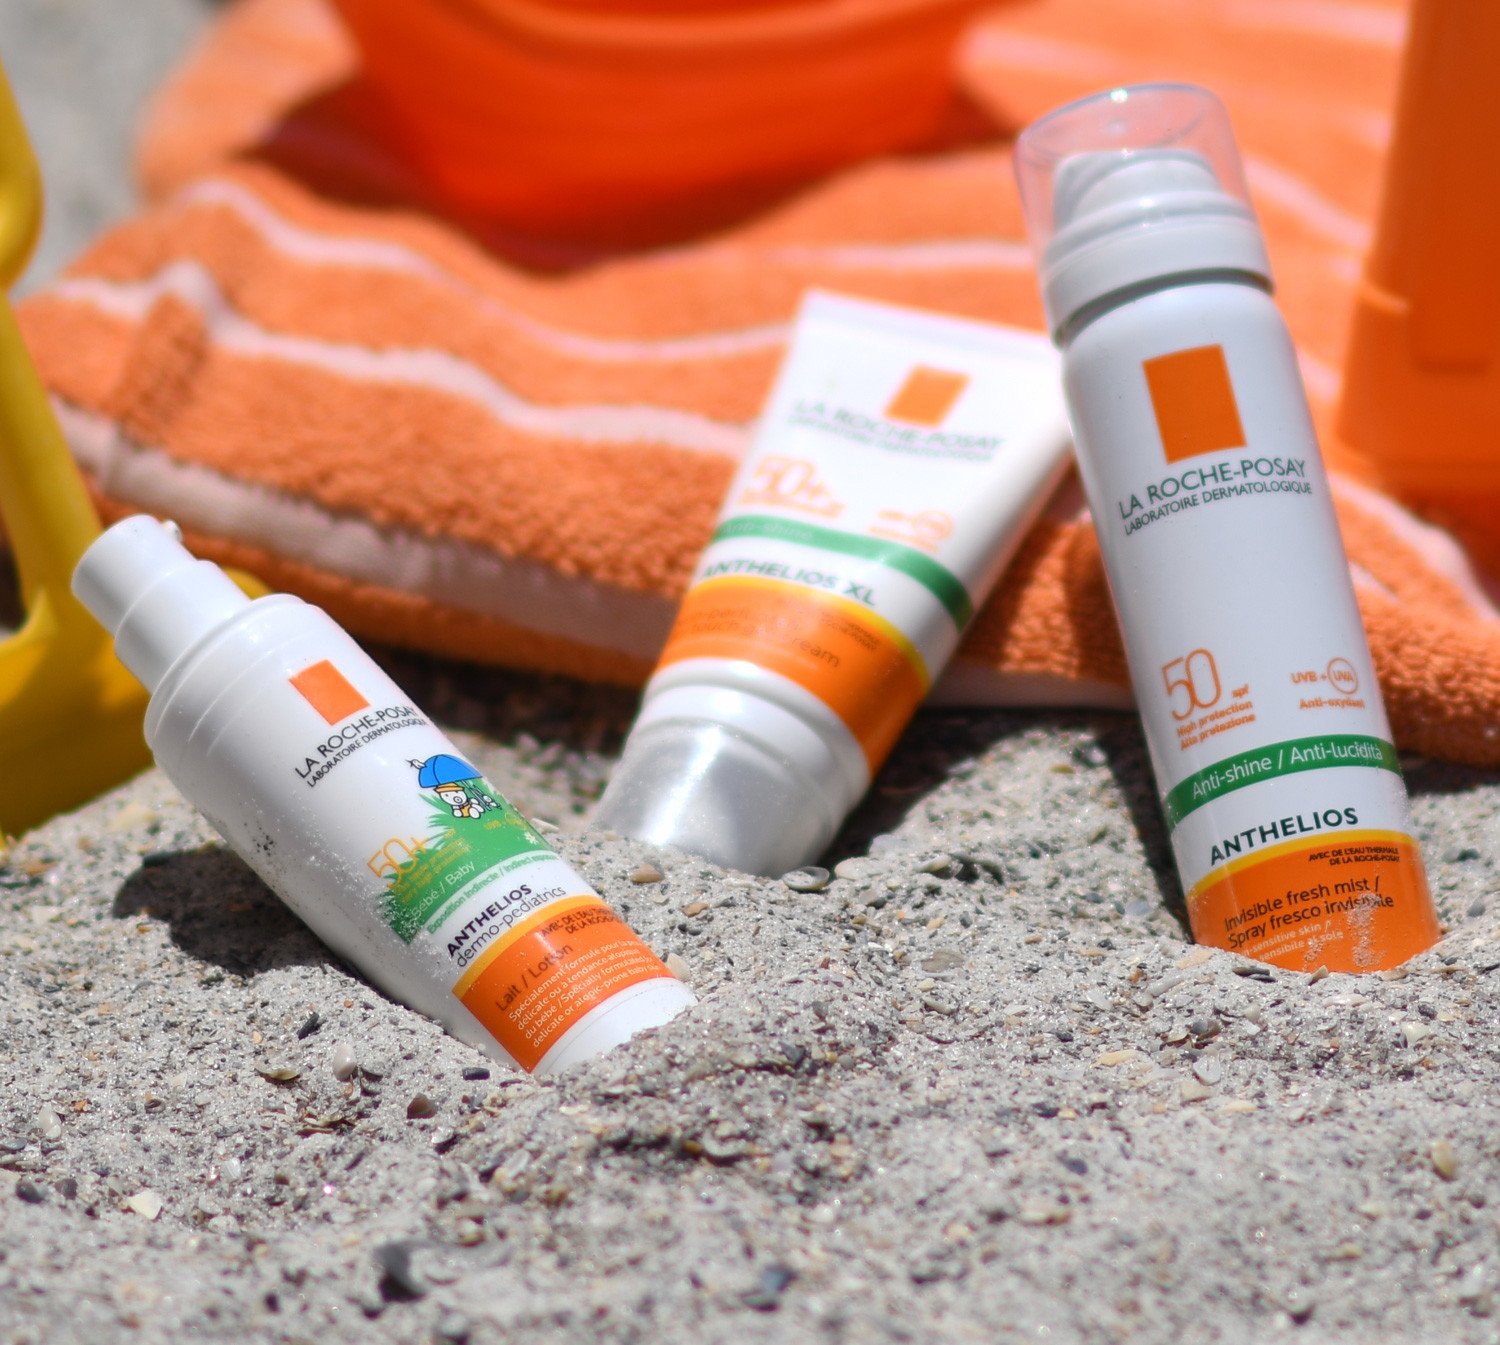 La Roche-Posay sunscreen review